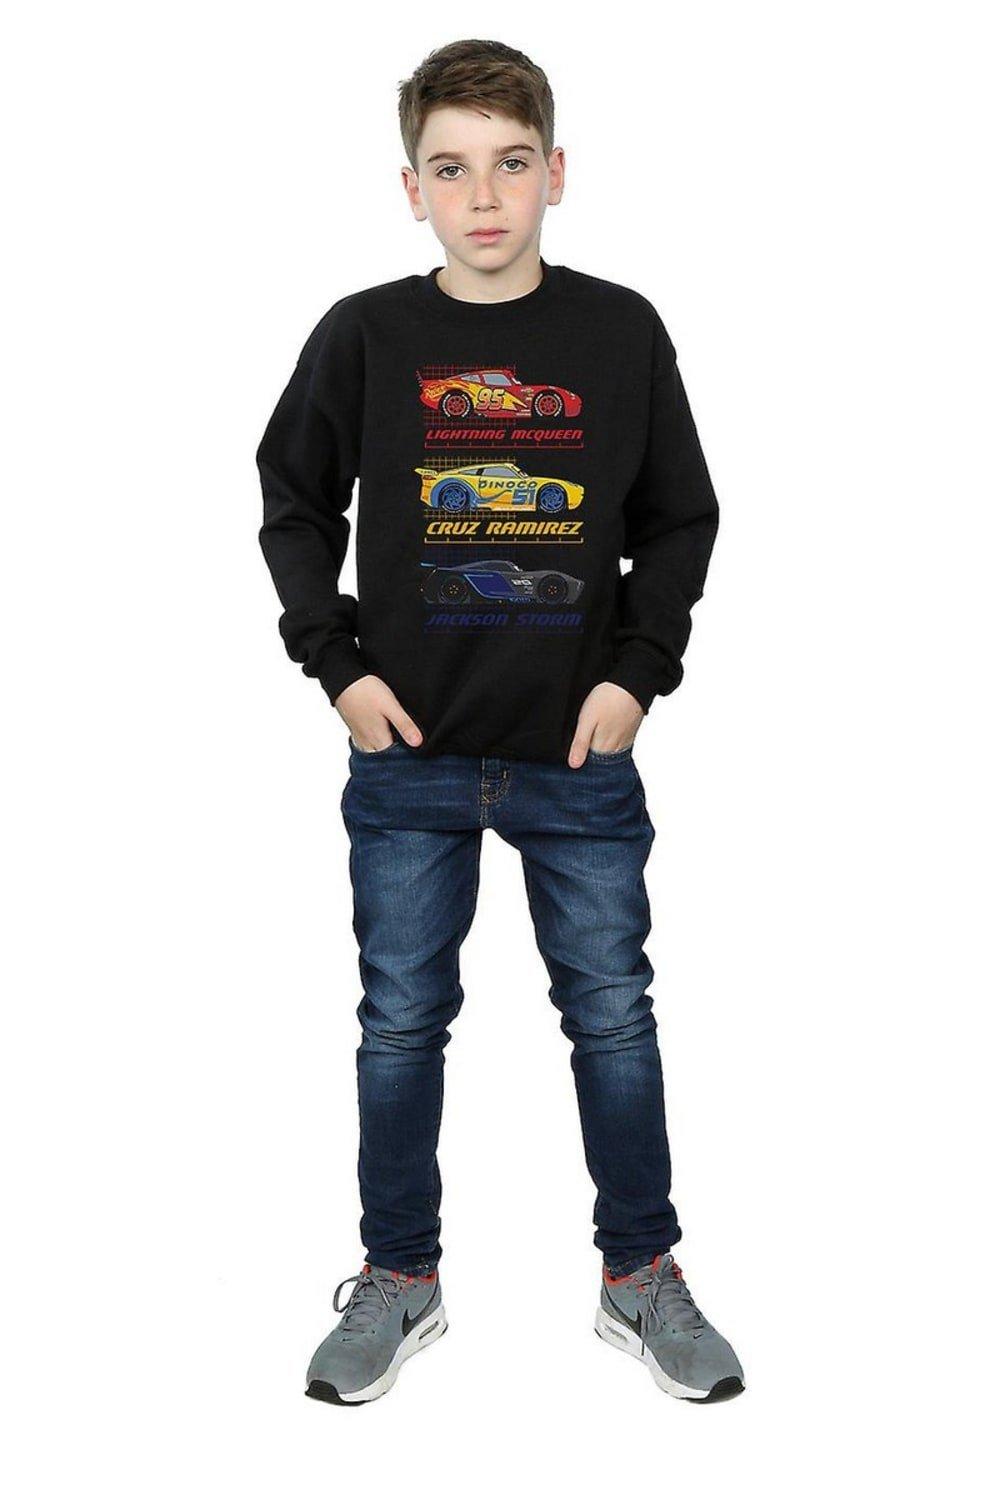 Racer Profile Cotton Sweatshirt